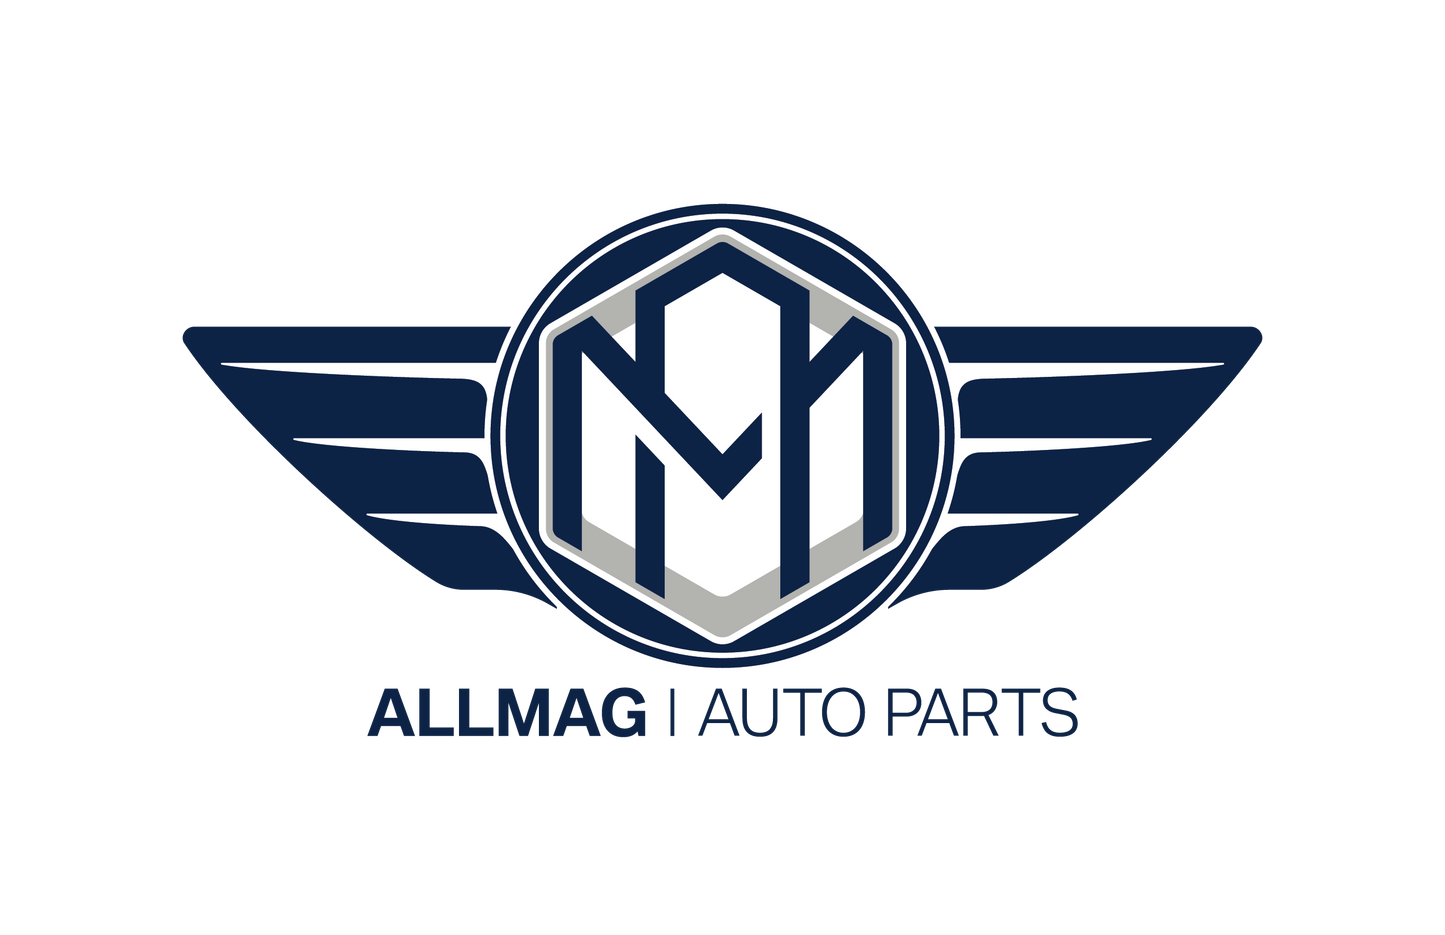 ALLMAG Auto Parts Gift Card